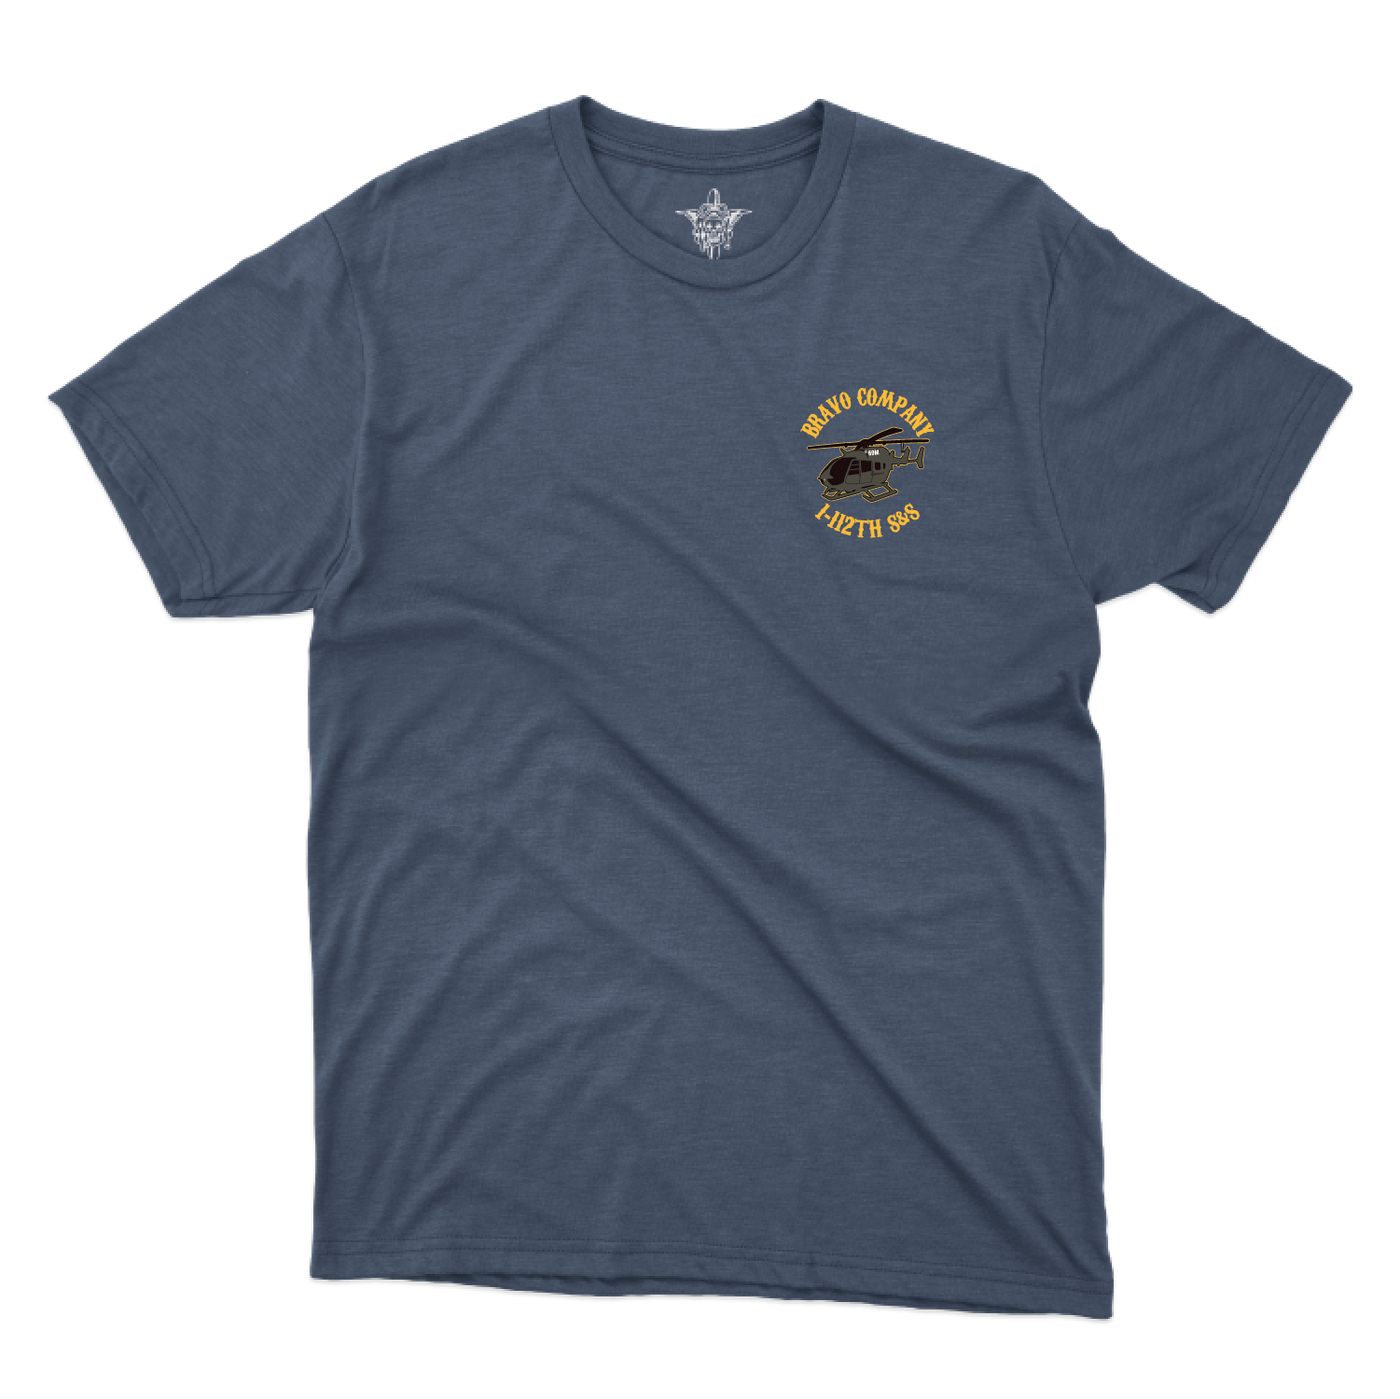 B Co 1-112th S&S T-Shirts